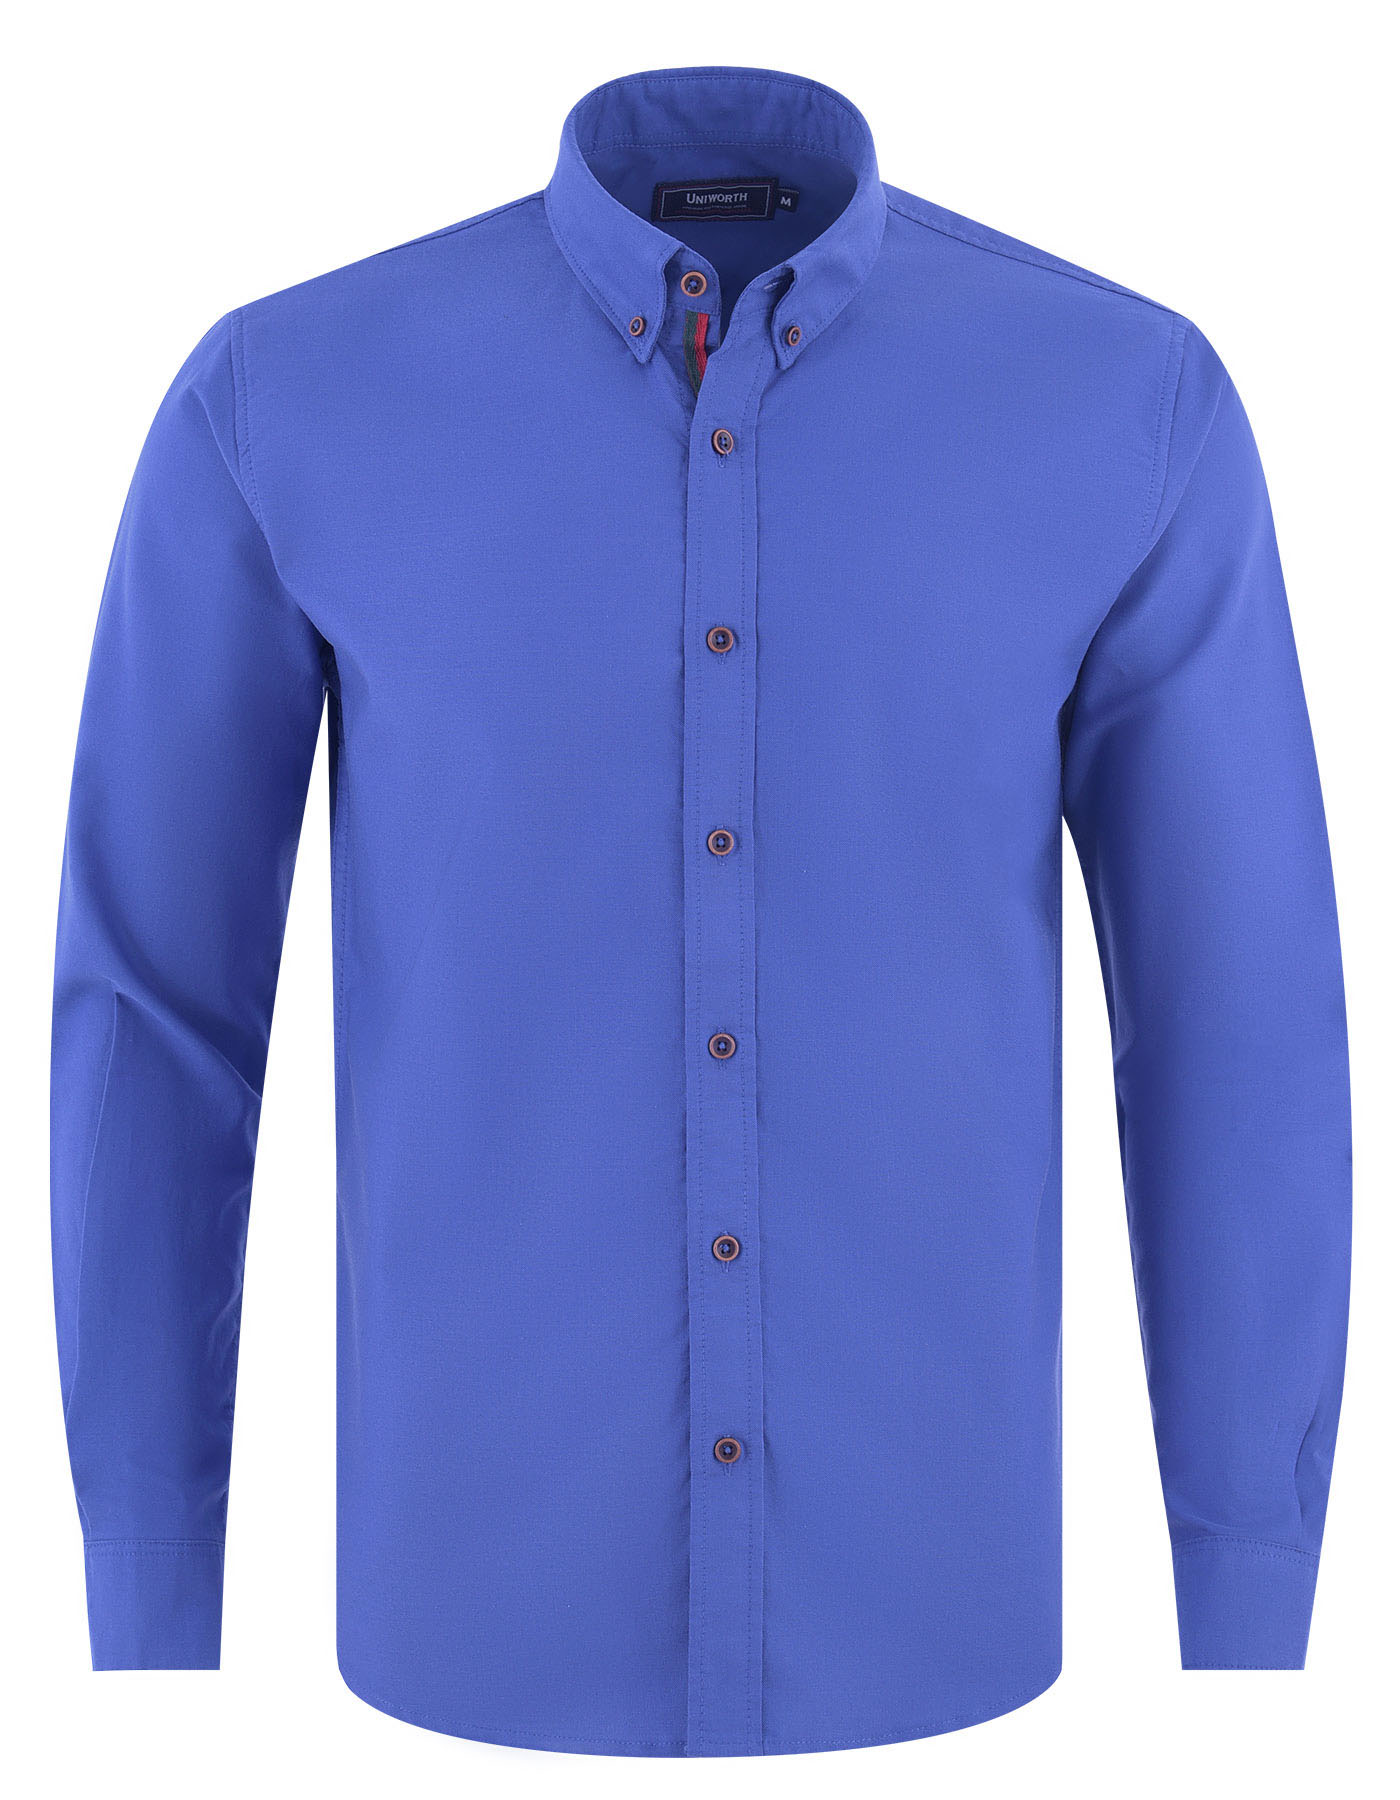 Buy Mens Blue Casual Shirt Online Shopping in Pakistan | Uniworth